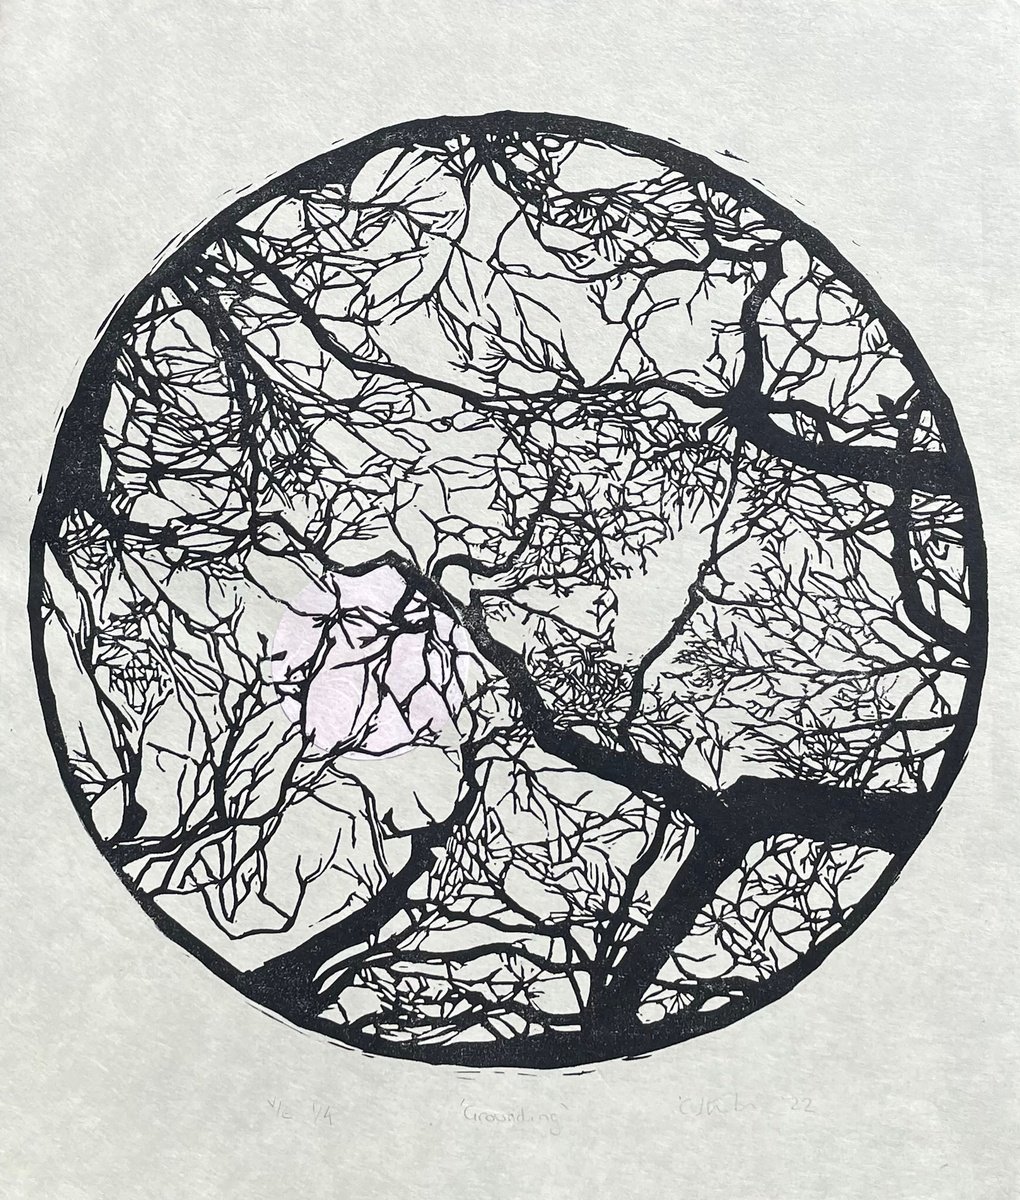 Grounding - Tree Branch Contemporary Linocut Print by C Staunton